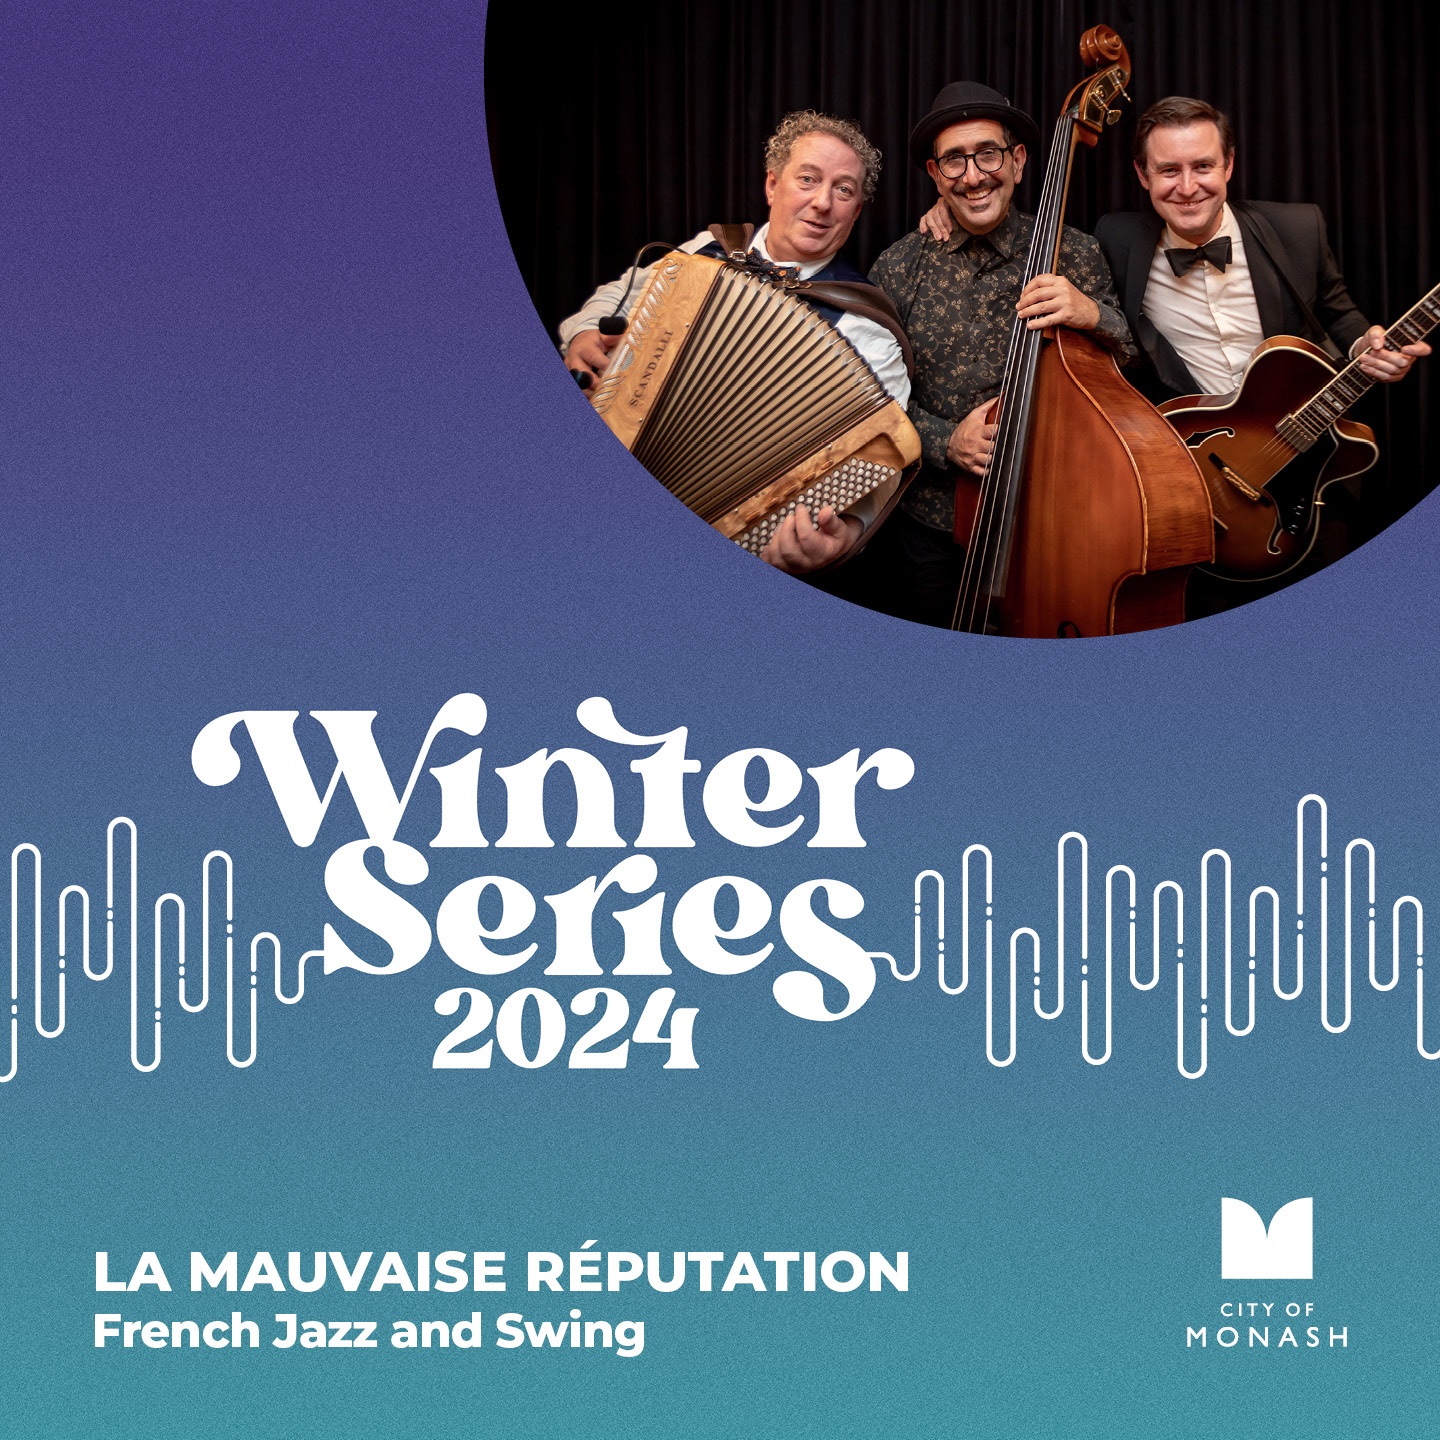 Winter Series 2024 - La Mauvaise Reputation